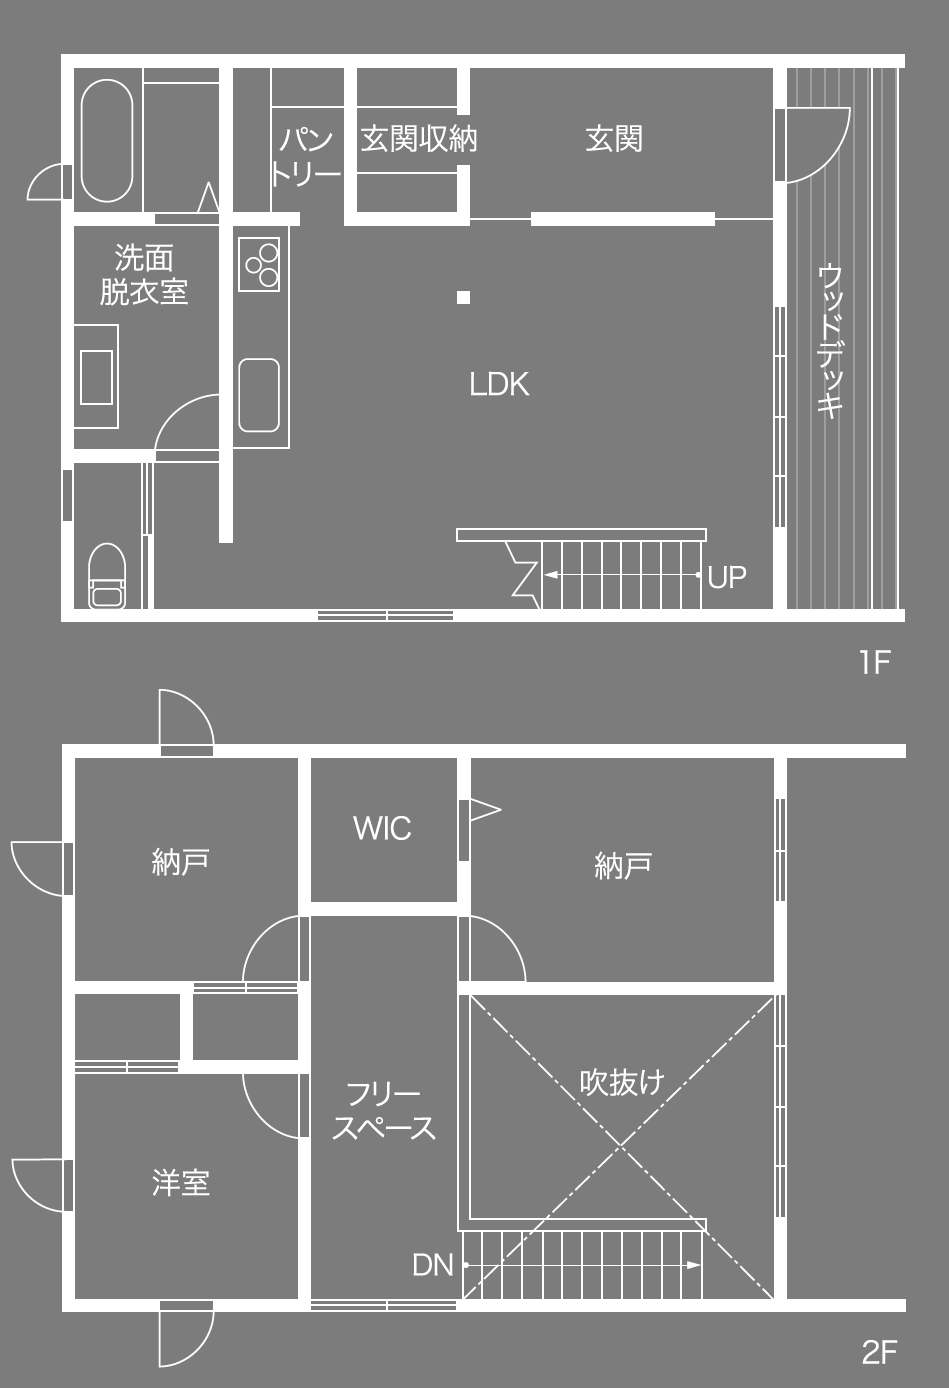 glamp 間取り図 モデルプラン2 栃木県宇都宮市で注文住宅を手掛ける NEXT HAUS DESIGN／ネクストハウスデザインの商品紹介